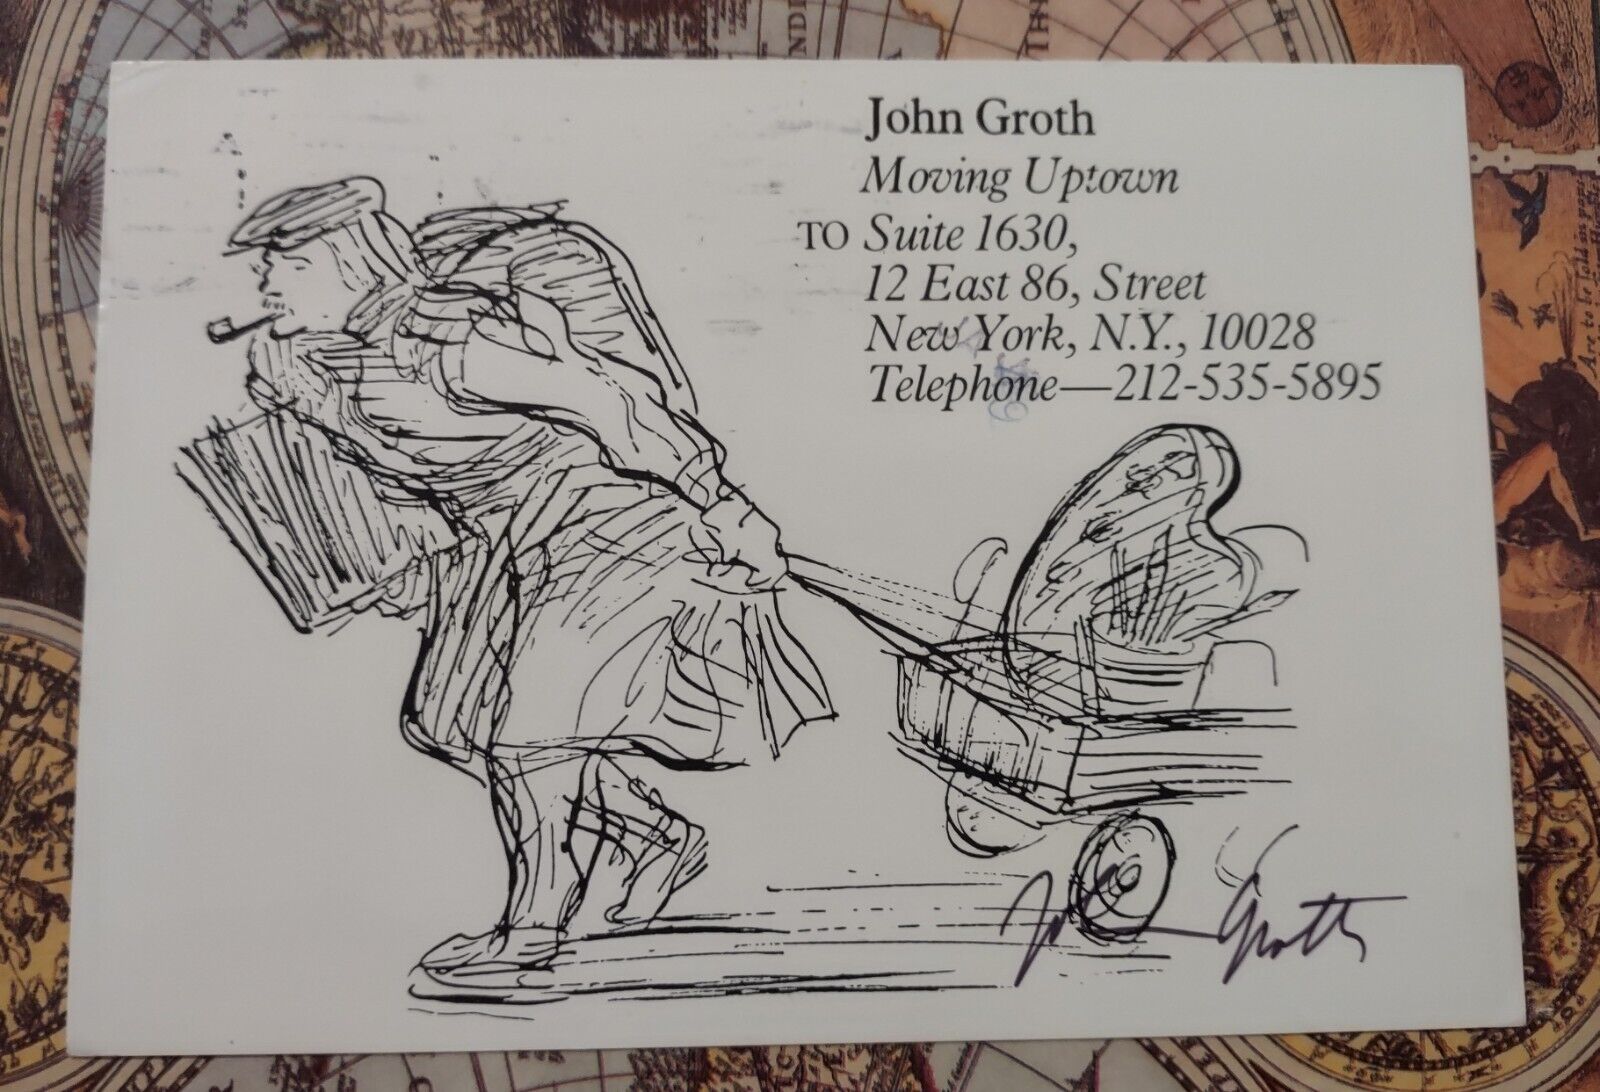 ARTIST JOHN GROTH SIGNED NEW ADDRESS CARD.  NICE ILLUSTRATION.  REAL AUTOGRAPH.